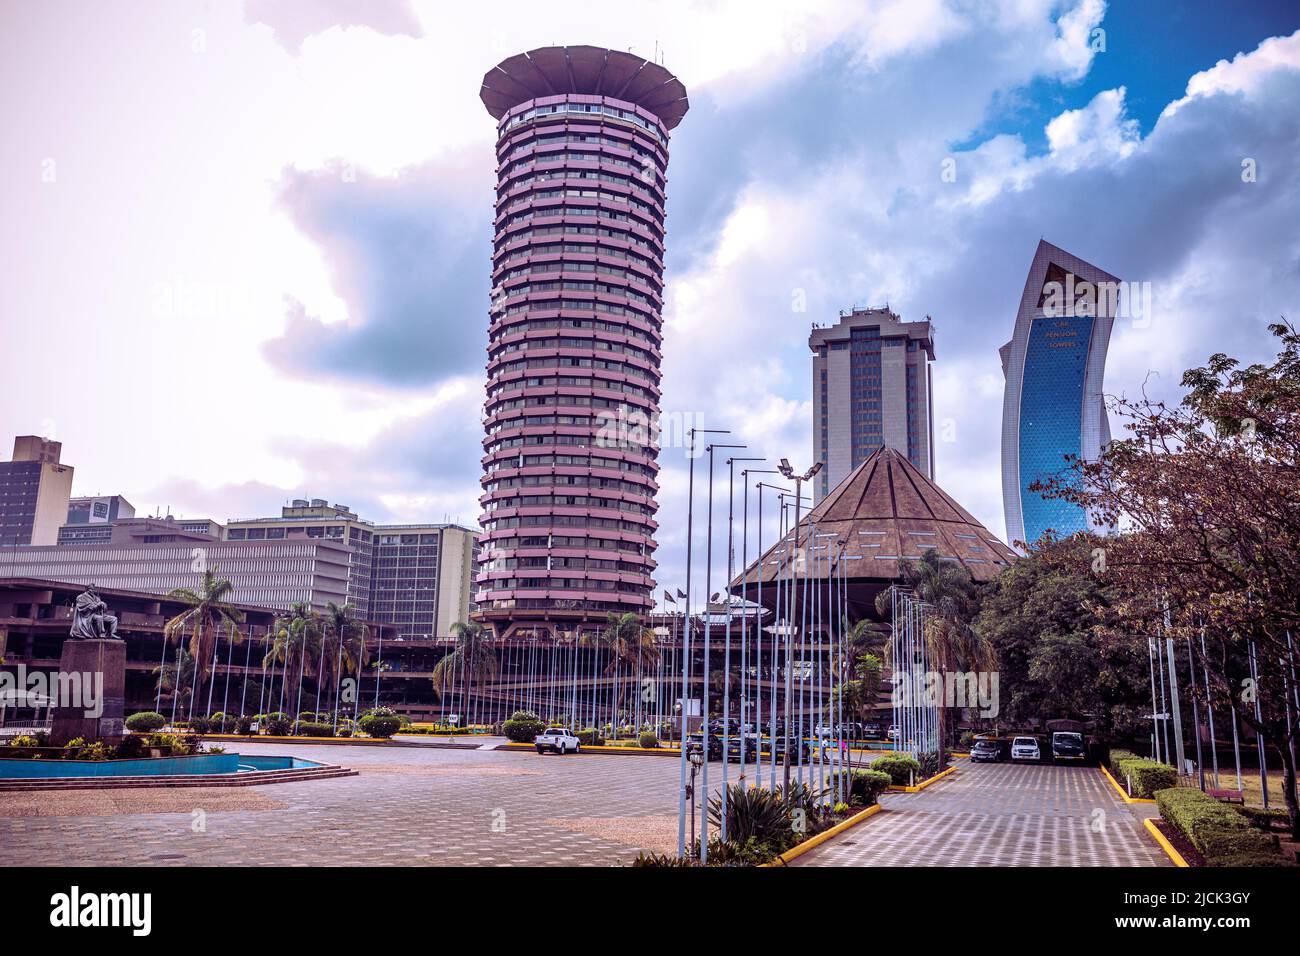 Nairobi Capital City County Calles Paisajes urbanos Skyline Rascacielos Edificios modernos Paisajes Estructuras de arquitectura Puntos de interés Torres Viajes al aire libre Foto de stock